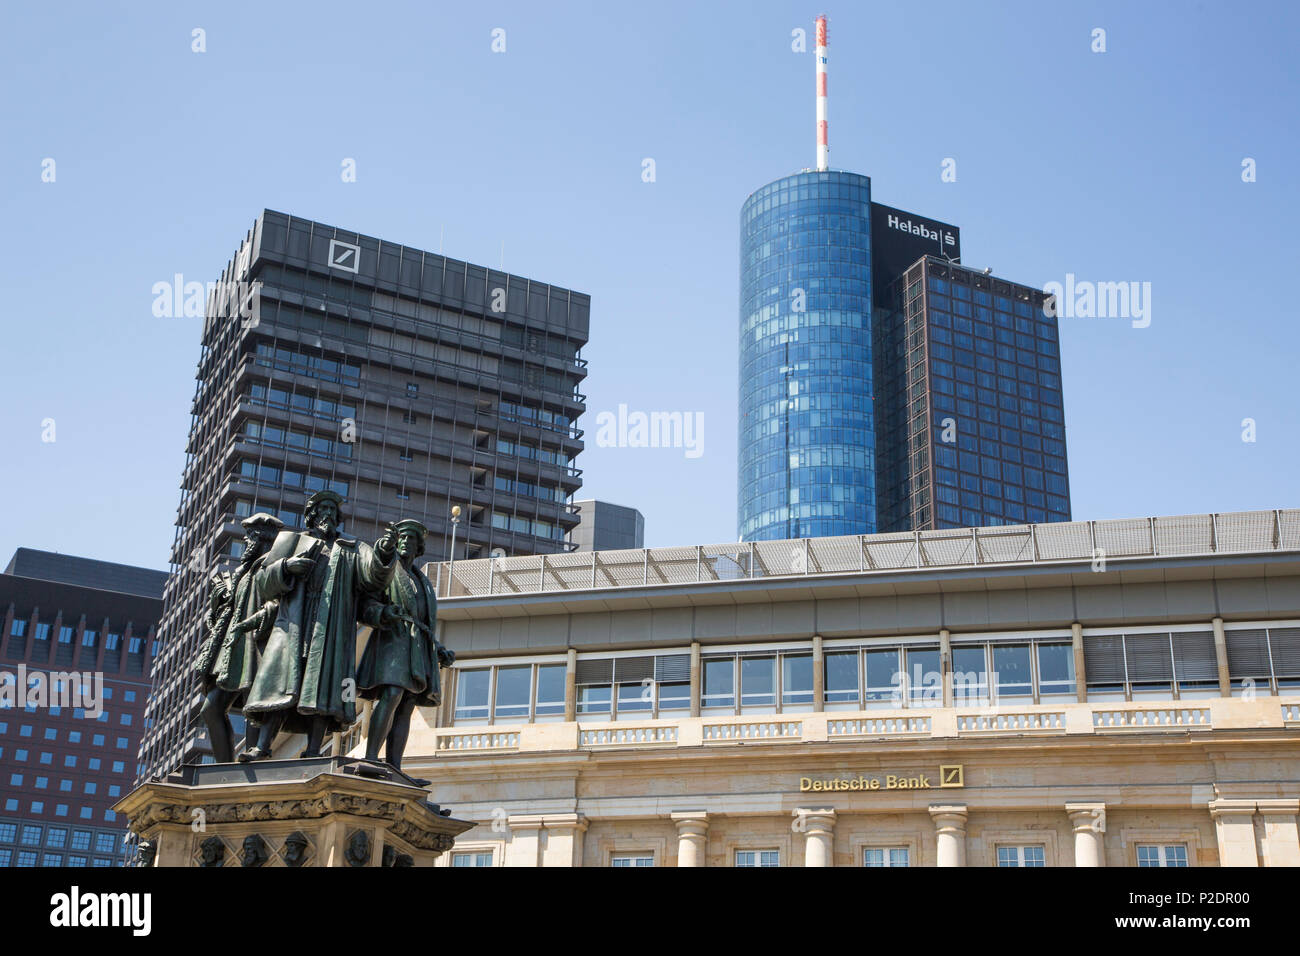 Statue beneath Financial district skyscrapers with Deutsche Bank building and Main Tower Helaba, Frankfurt am Main, Hessen, Germ Stock Photo